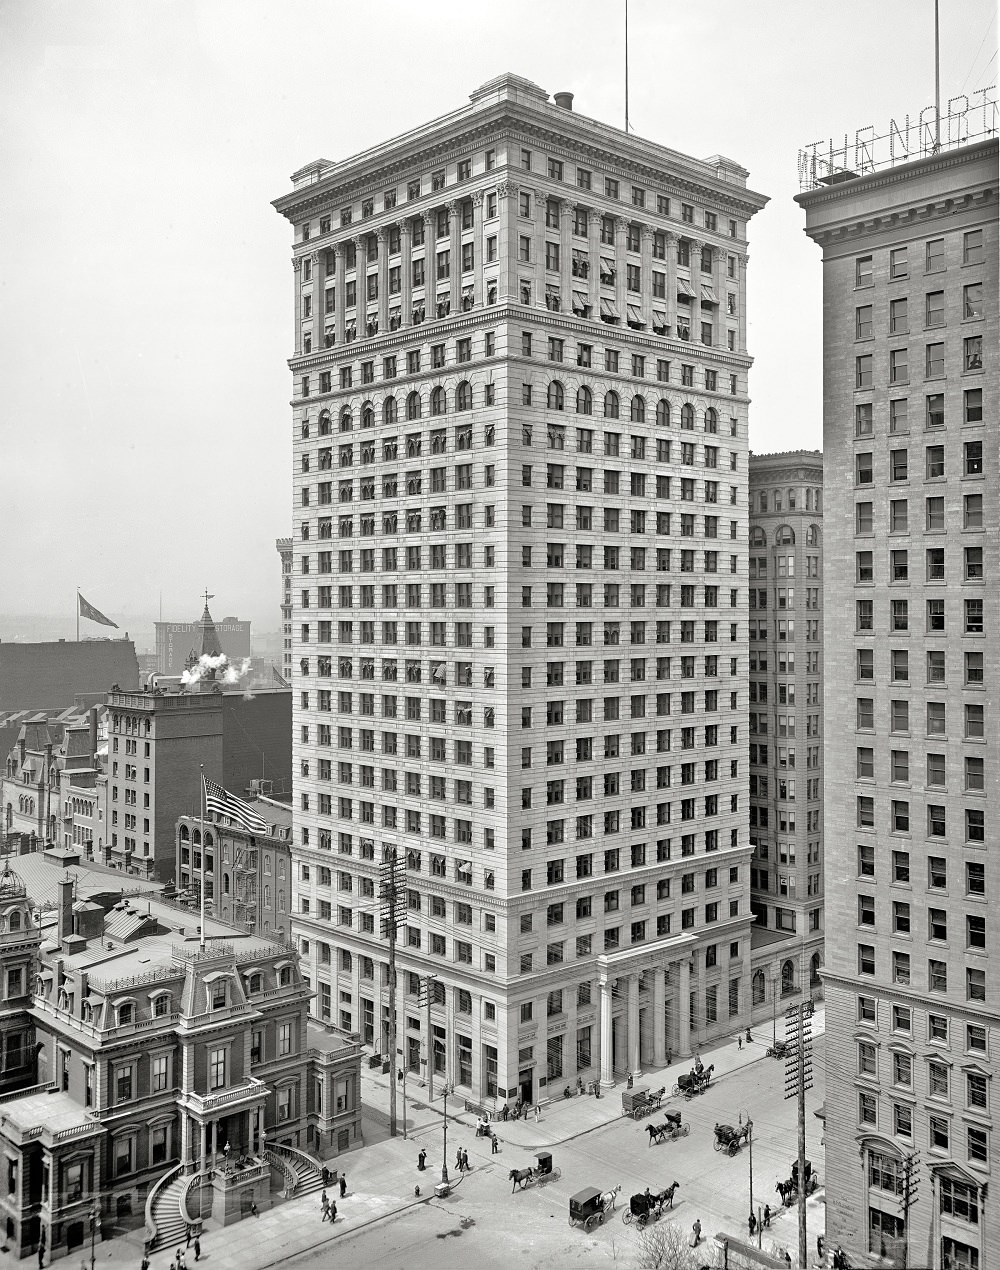 Land Title Trust Building, Philadelphia, 1905